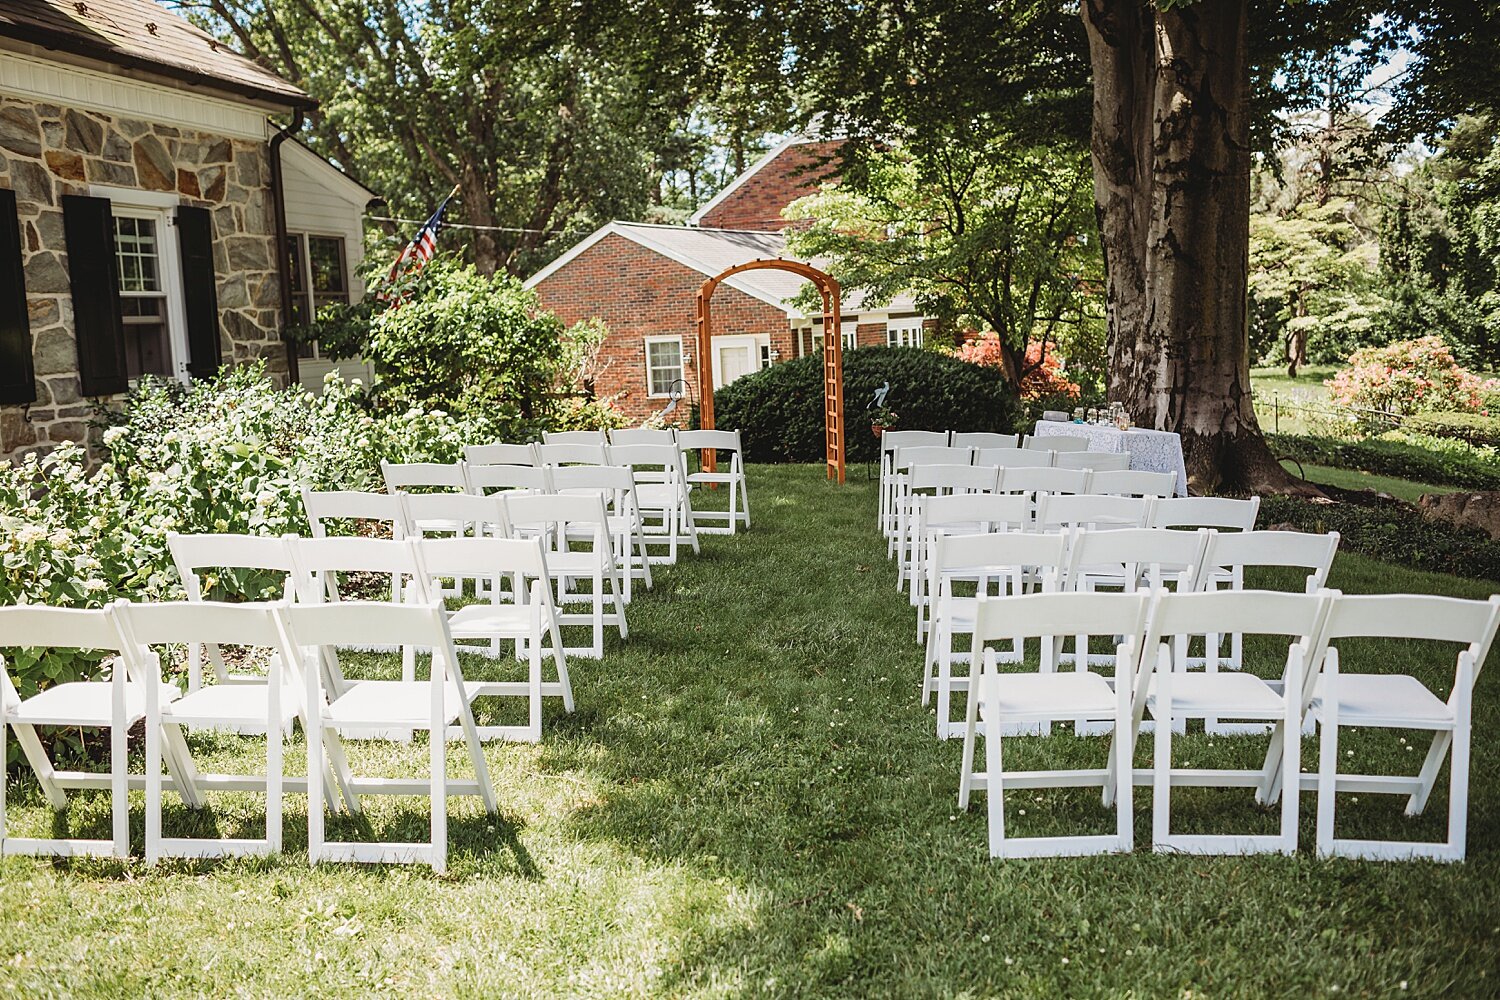 Berks County Pennsylvania intimate summer backyard Covid wedding photographer